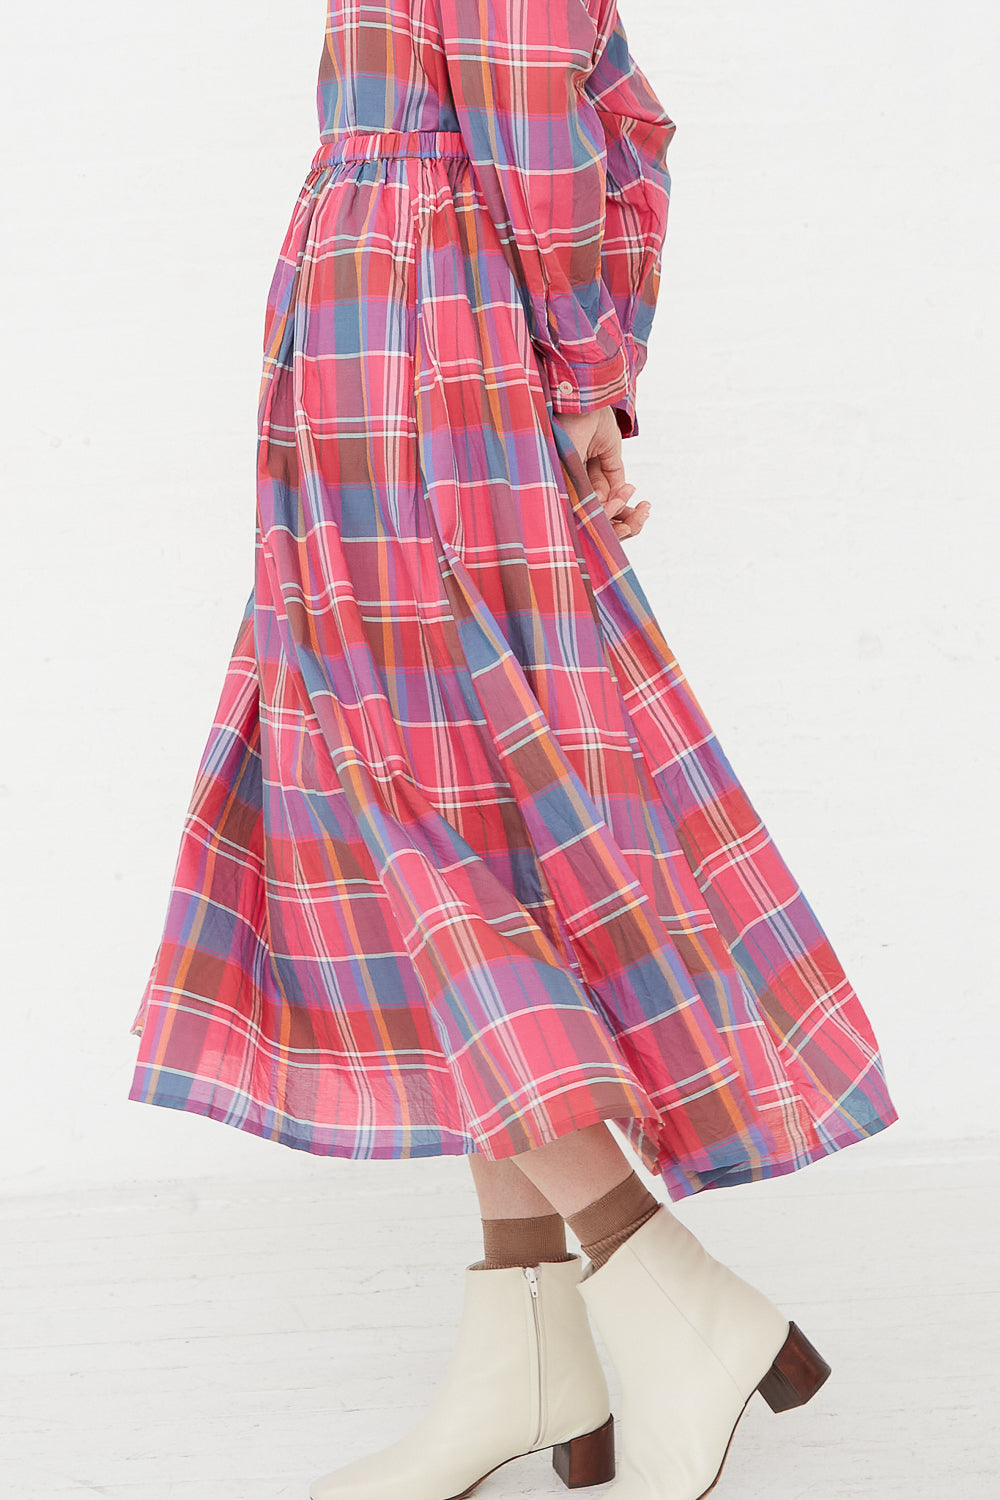 Ichi - Skirt in Pink side detail